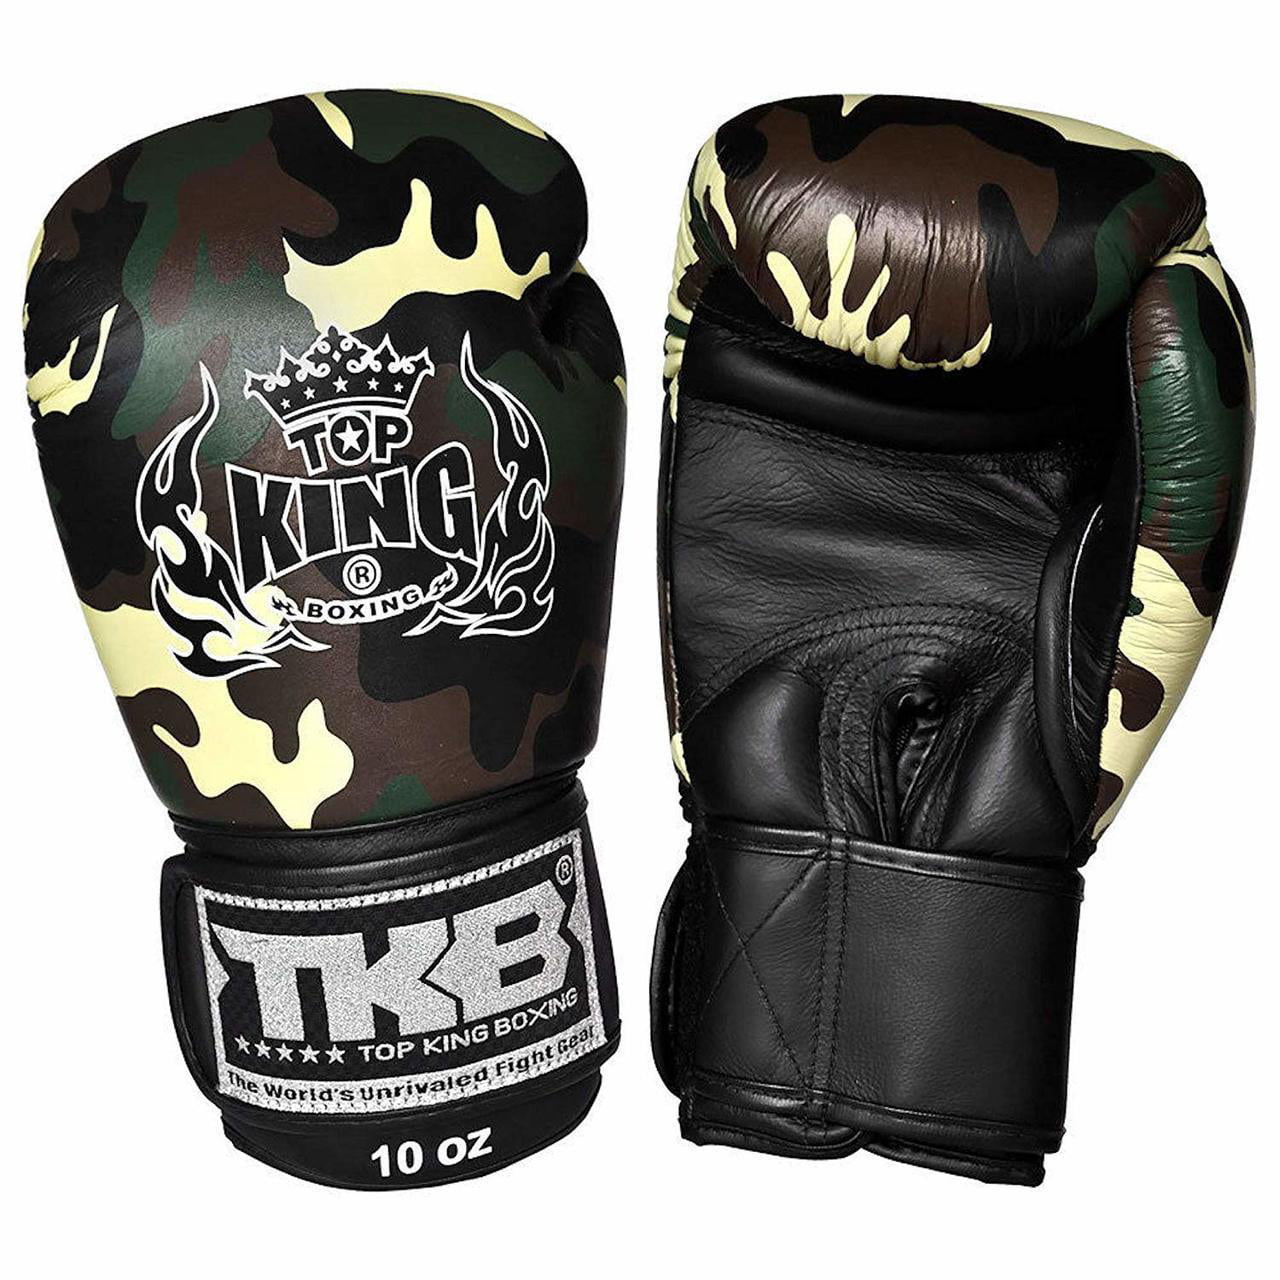 NWT TOP KING Boxing gloves Silver TKBGSS 01 Super Star Air MMA Muay Thai gloves 